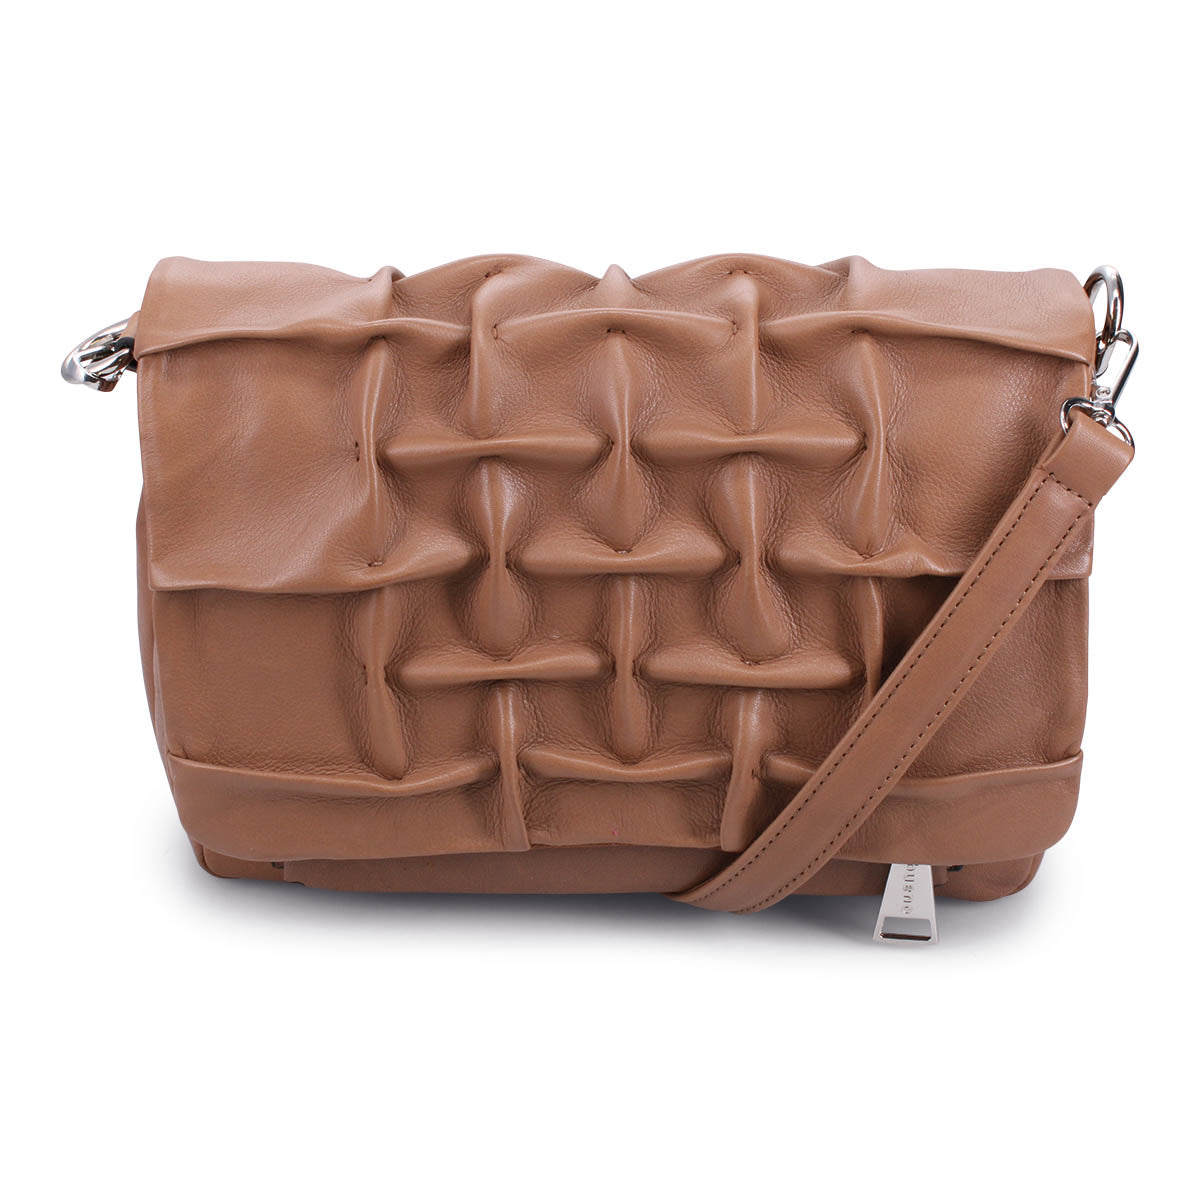 Handbags Australia | Ladies Leather Handbags, Wallets & Clutch